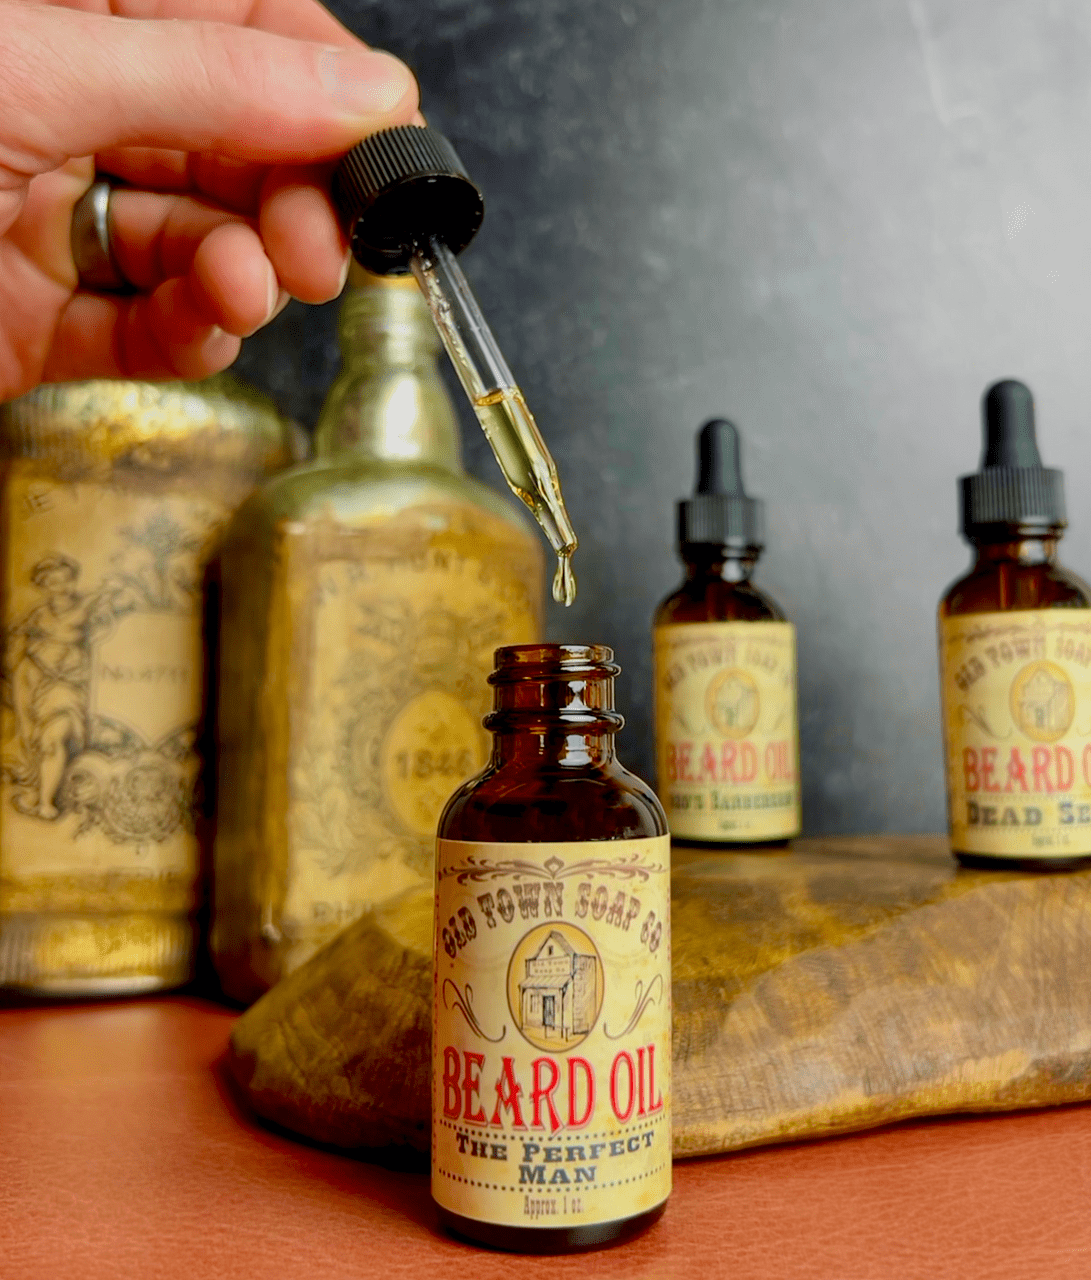 Bay Rum -Beard Oil - Old Town Soap Co.